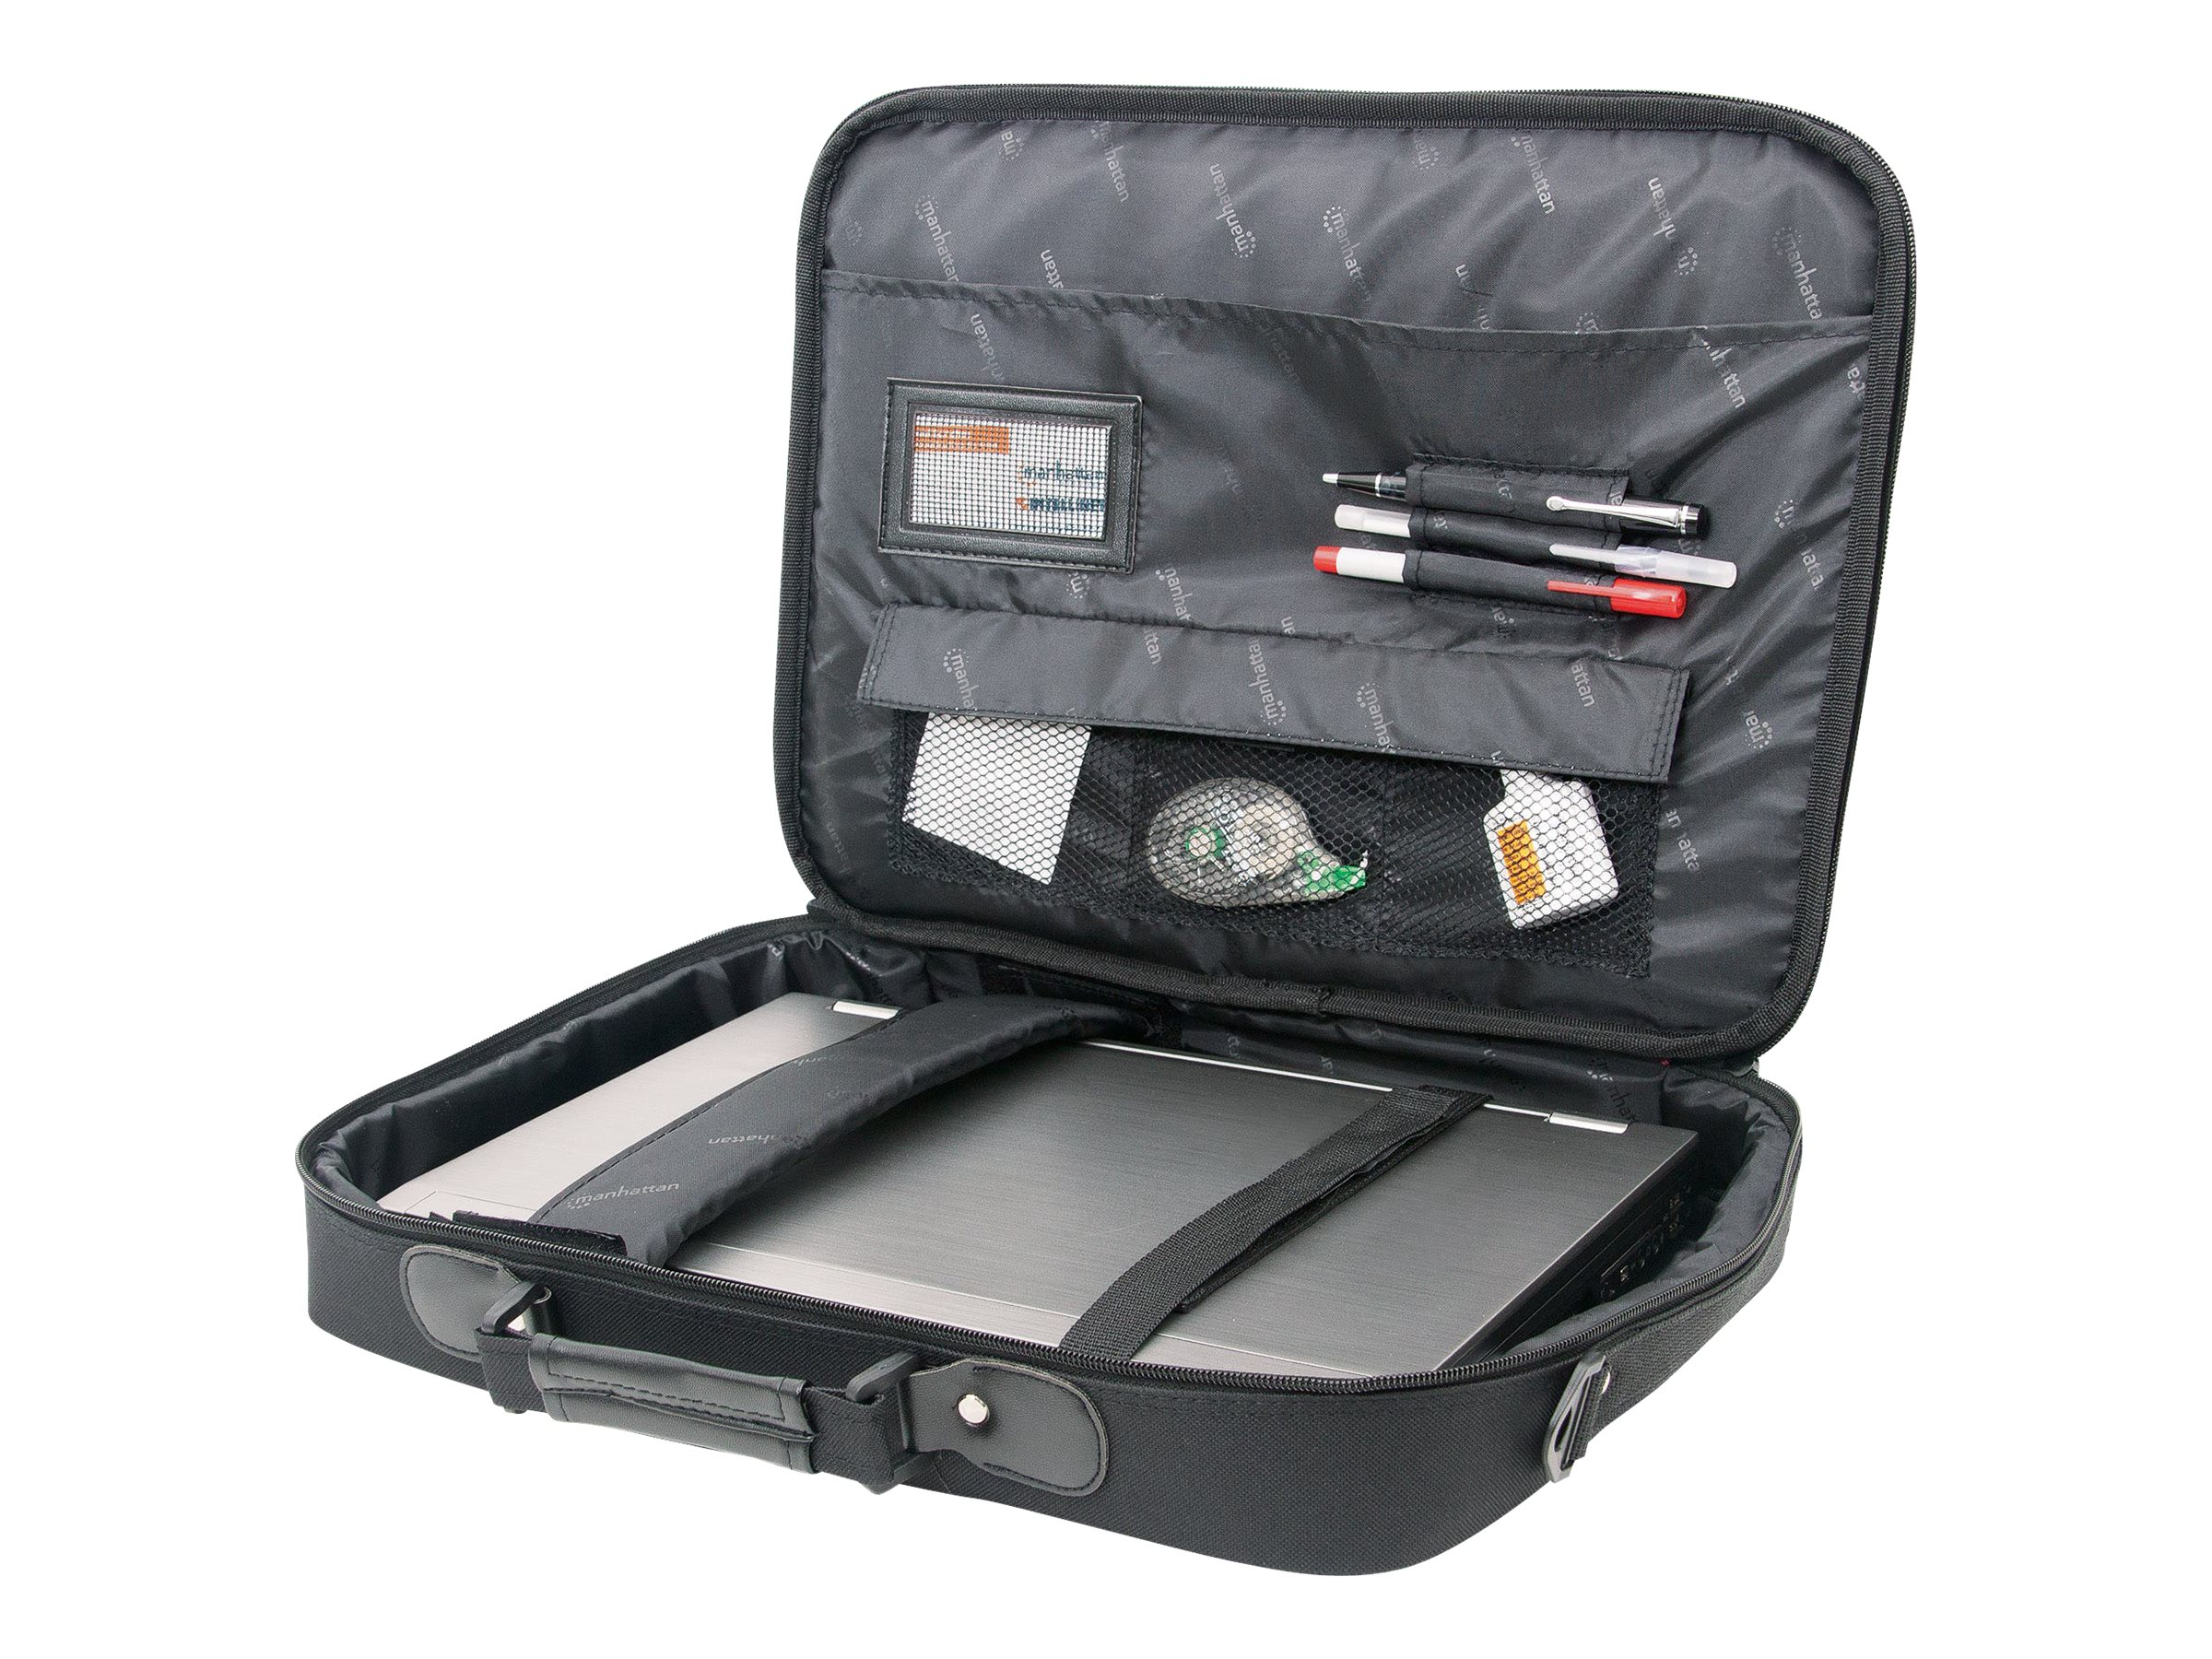 Manhattan Empire Laptop Bag 17.3", Clamshell design, Accessories Pocket, Shoulder Strap (removable)